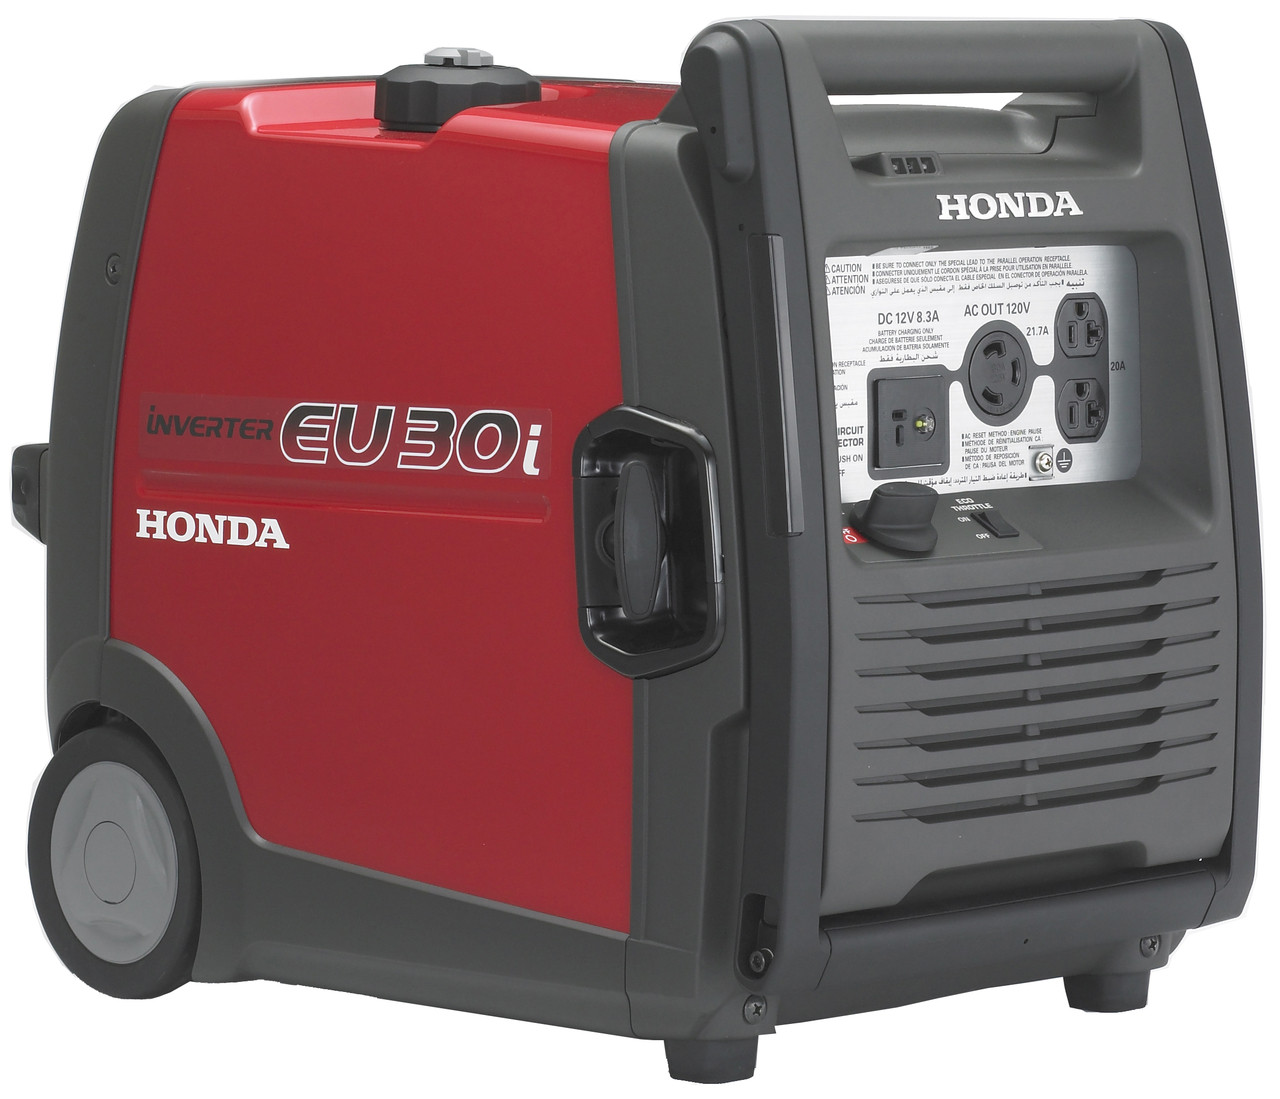 Honda EU30i Handy 3kVa inverter portable generator